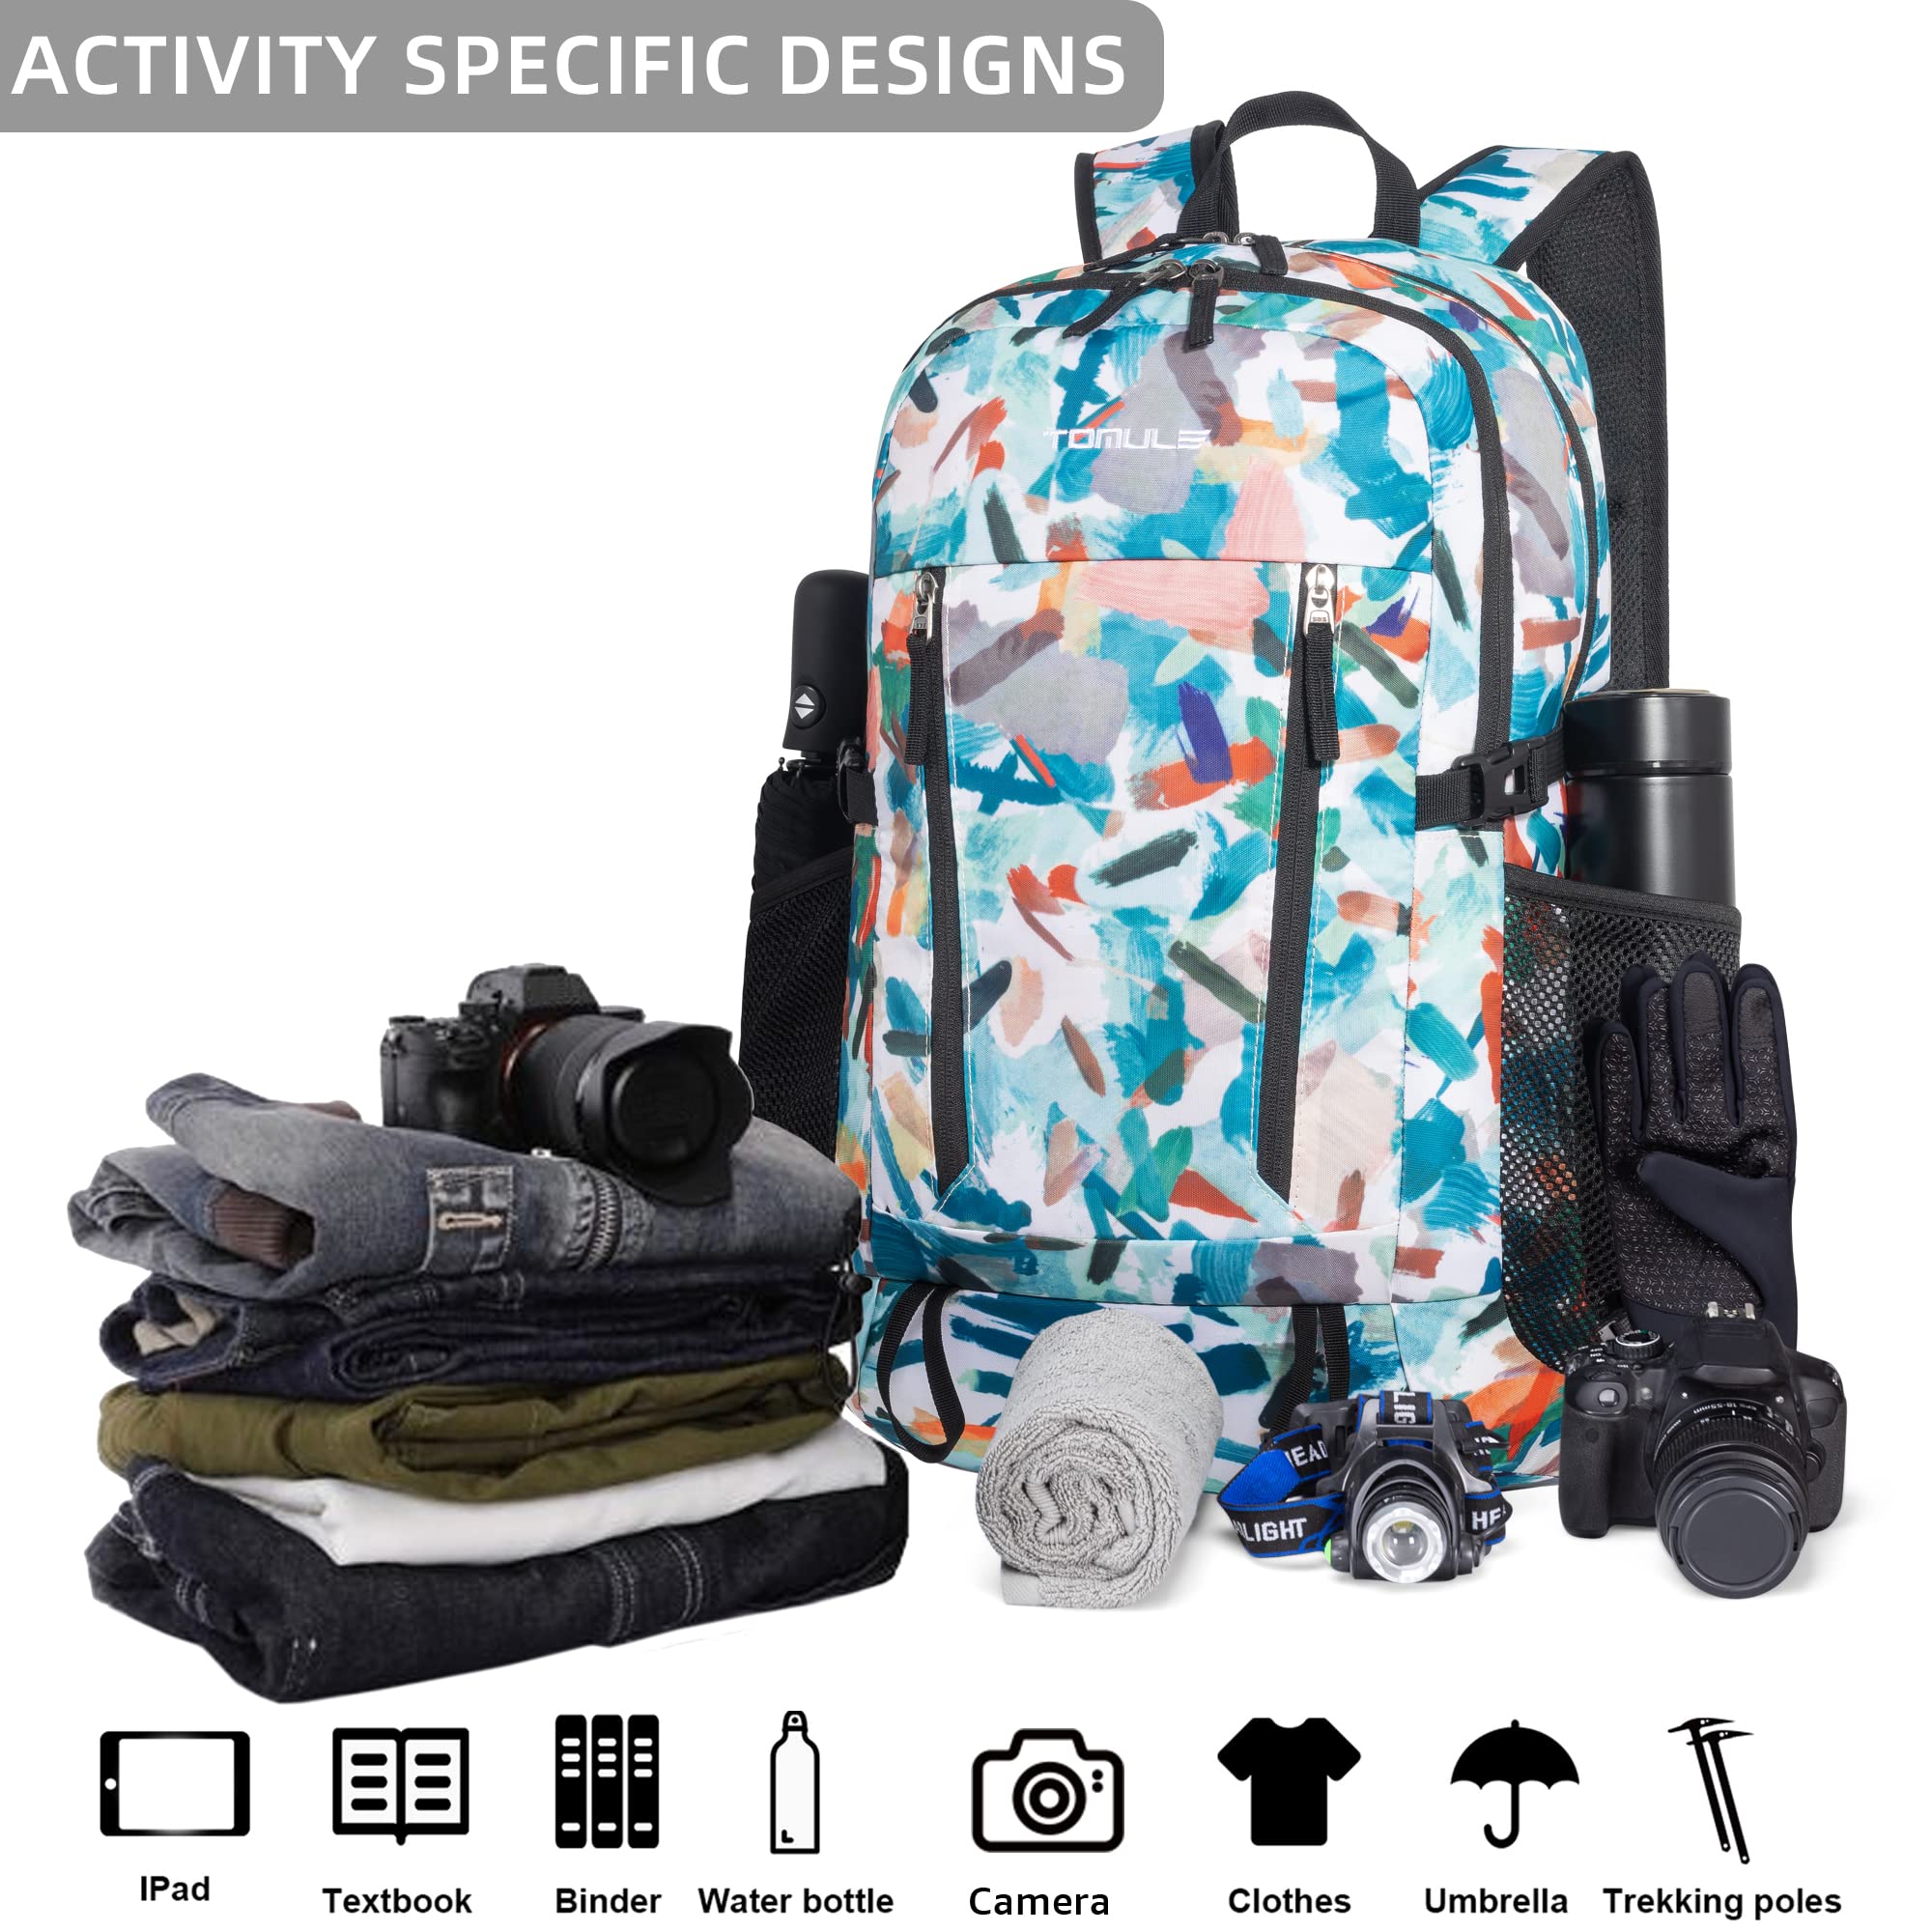 TOMULE Camping Hiking Daypacks, 40L Lightweight Packable Hiking Backpack Travel Backpack for Women Men